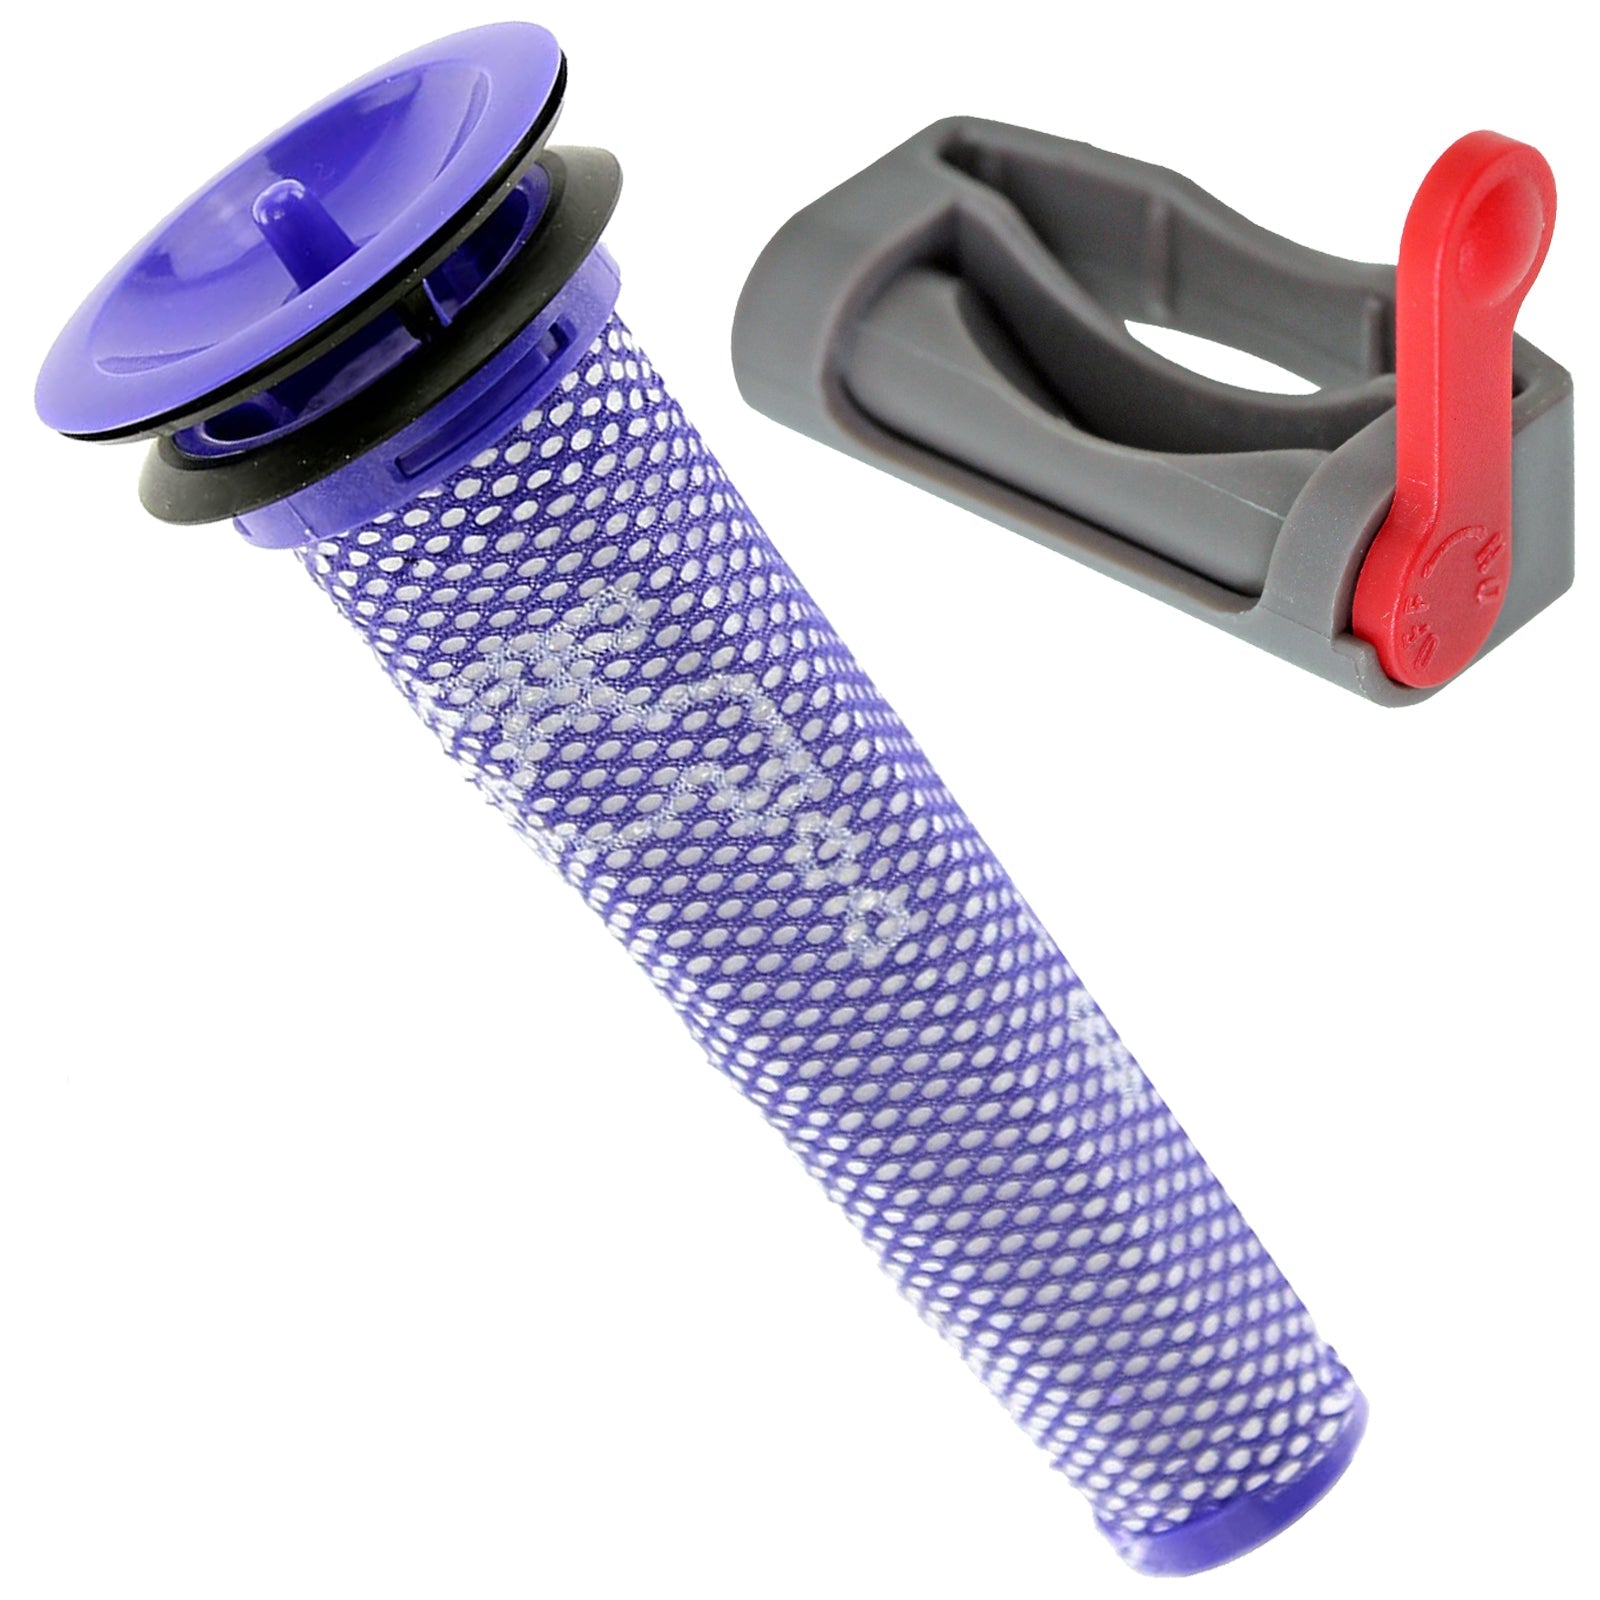 Washable Pre-Motor Stick Filter + Trigger Lock for Dyson V8 Vacuum Cleaner